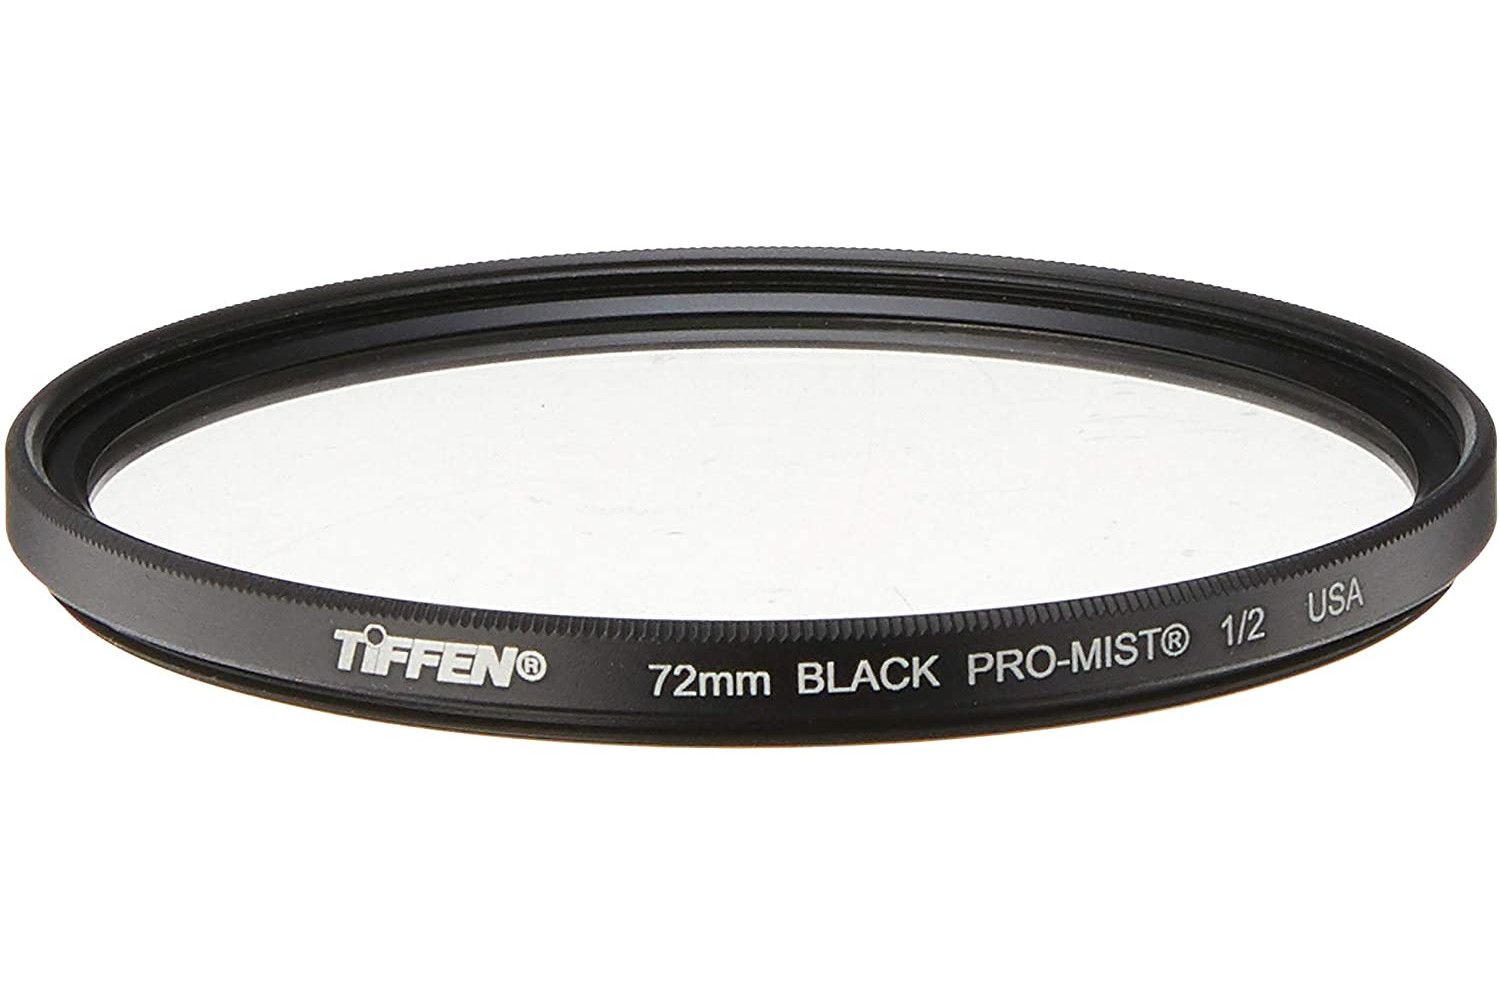 A closer look at the Tiffen Black Pro-Mist camera Filter